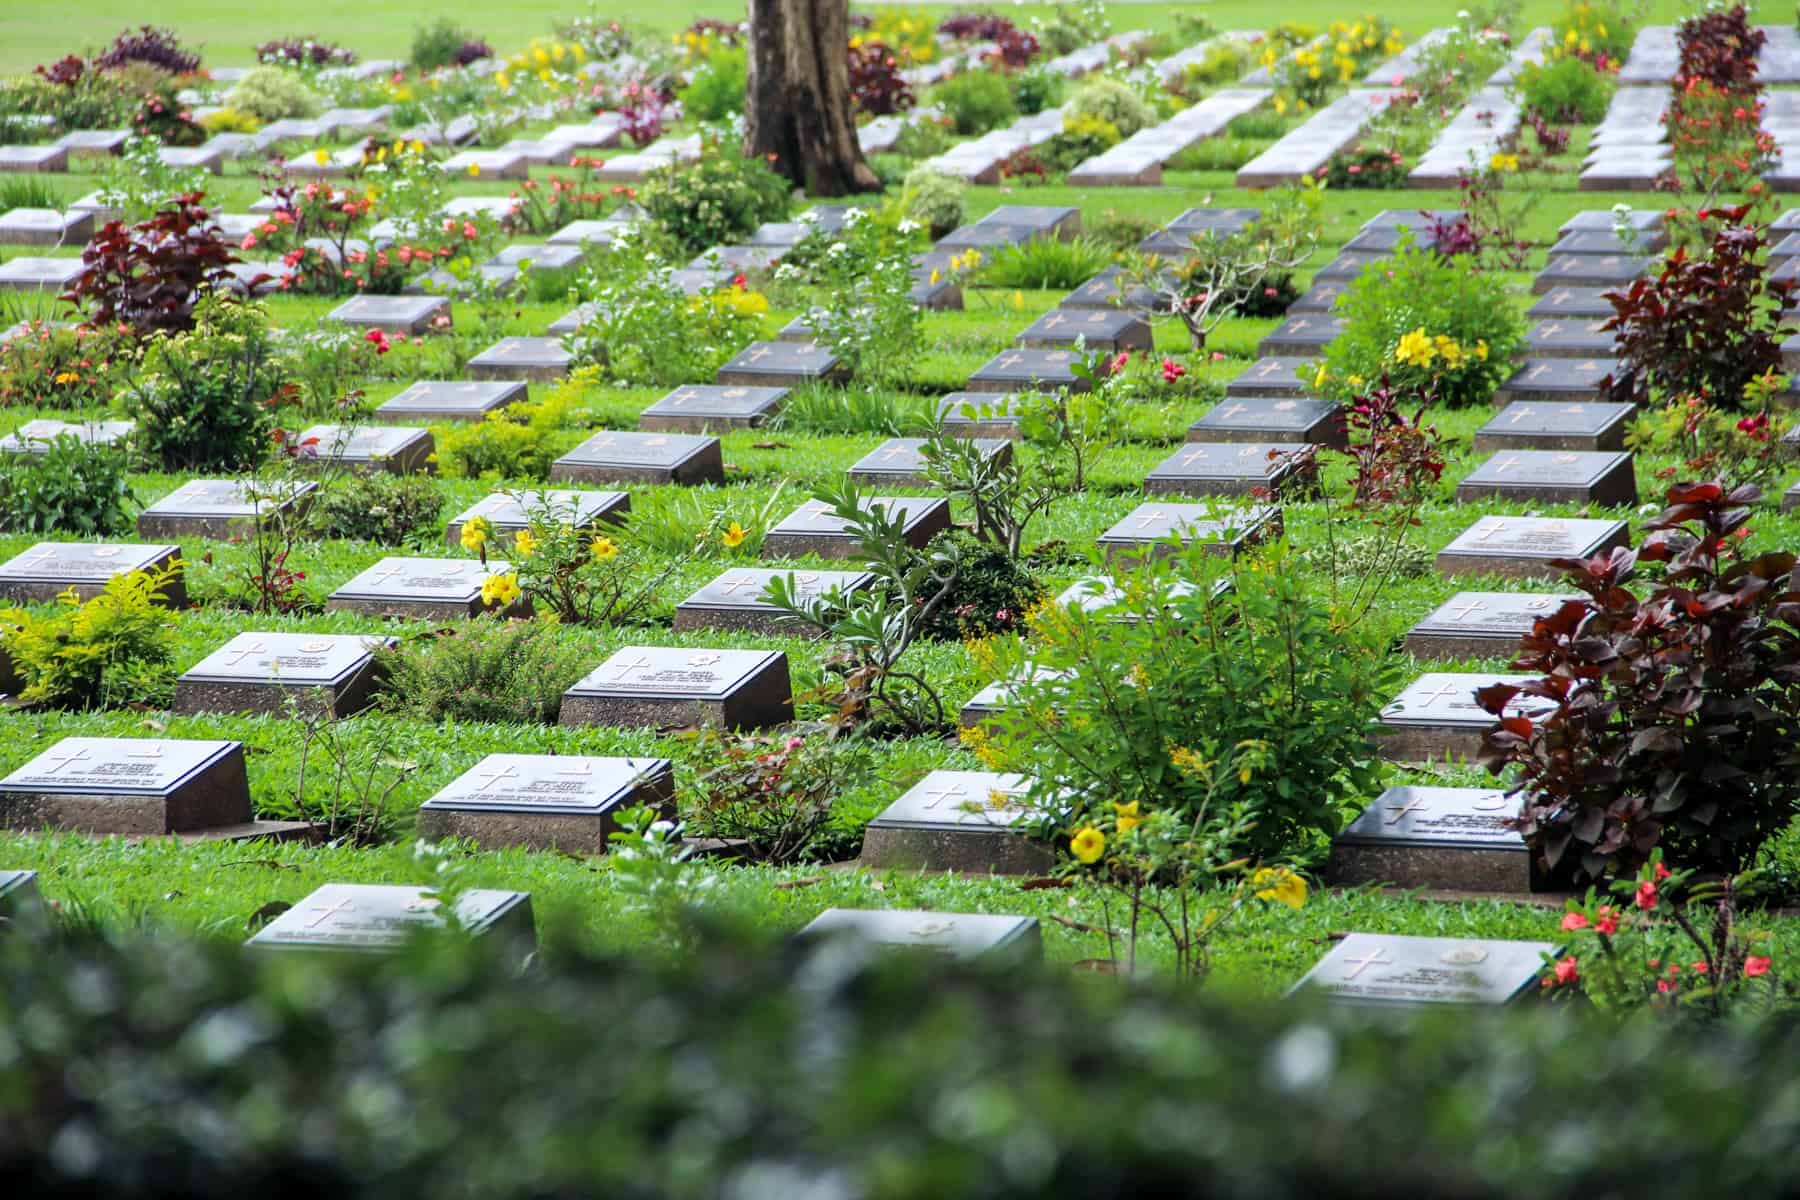 Neat rows of inscribed bronze gravestones at the Kanchanaburi War Cemetery.